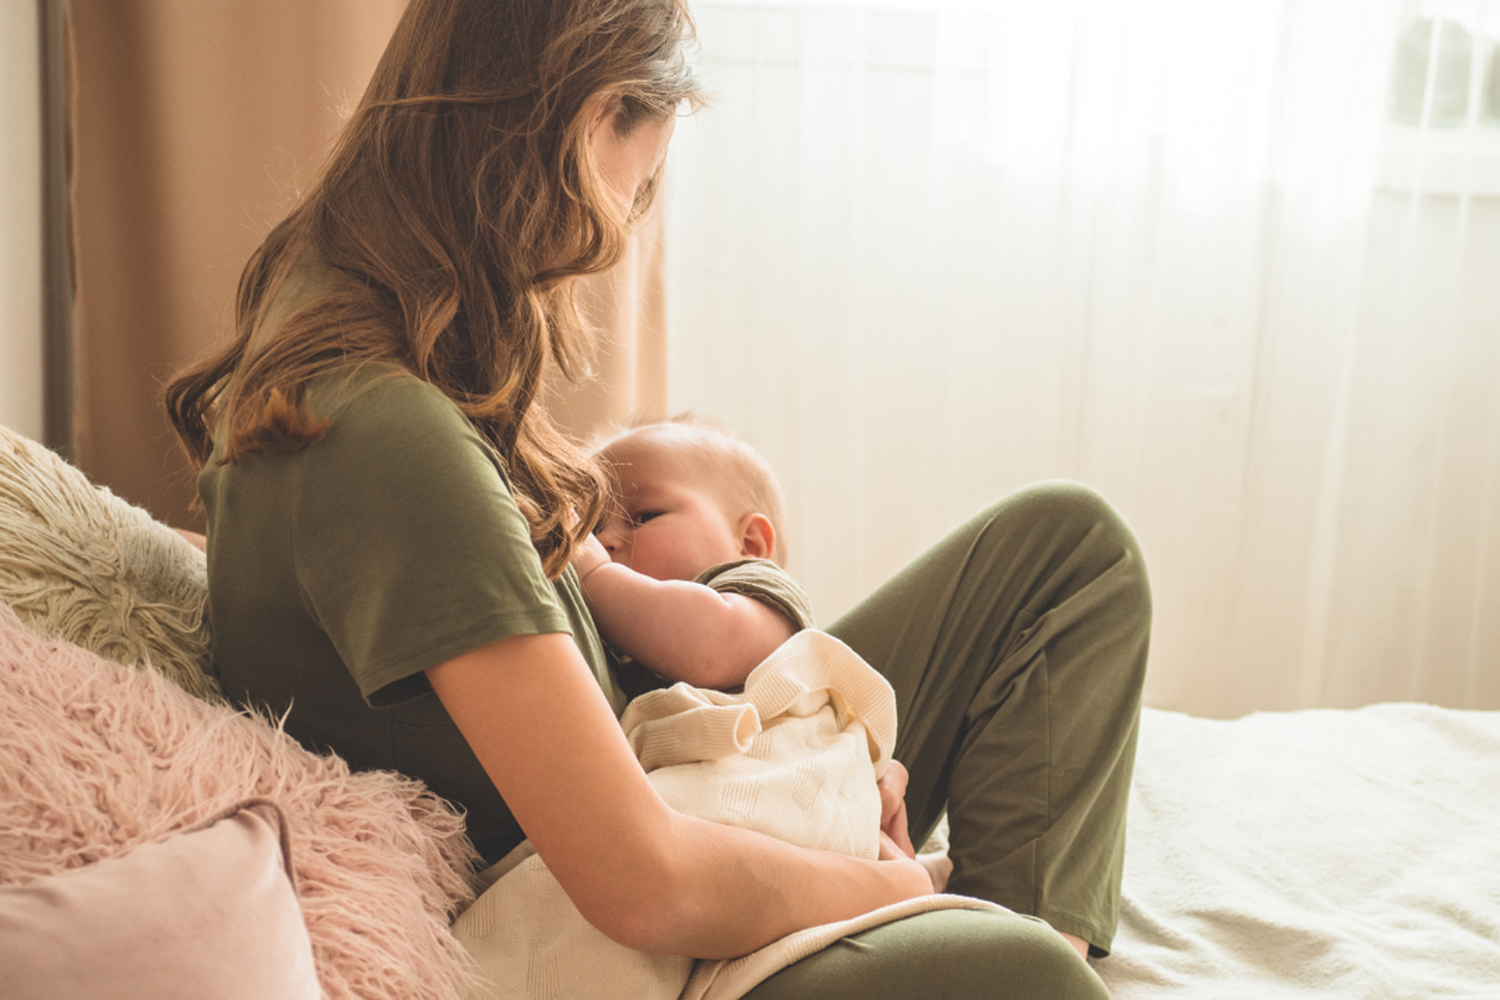 woman breastfeeding baby - lactation consultant service